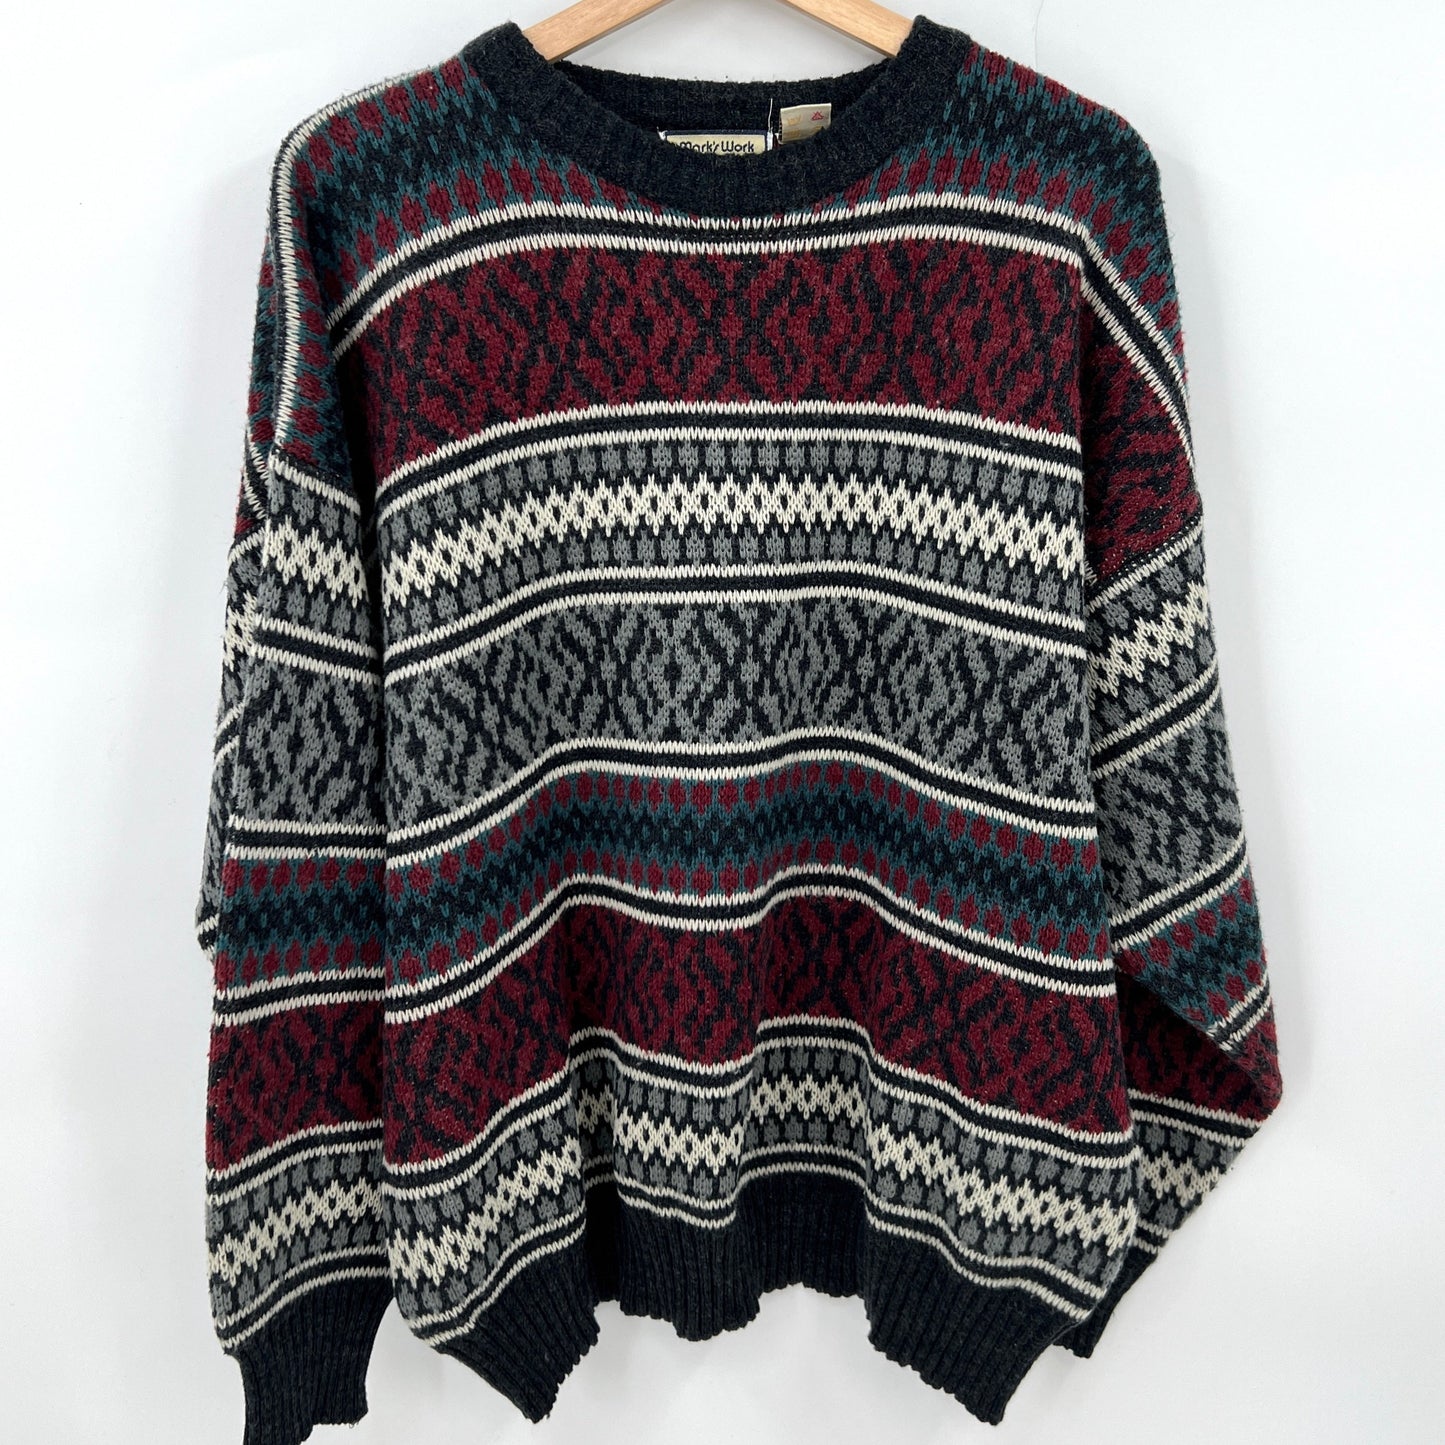 SOLD. Vintage Mark's Work Wearhouse Unisex Sweater